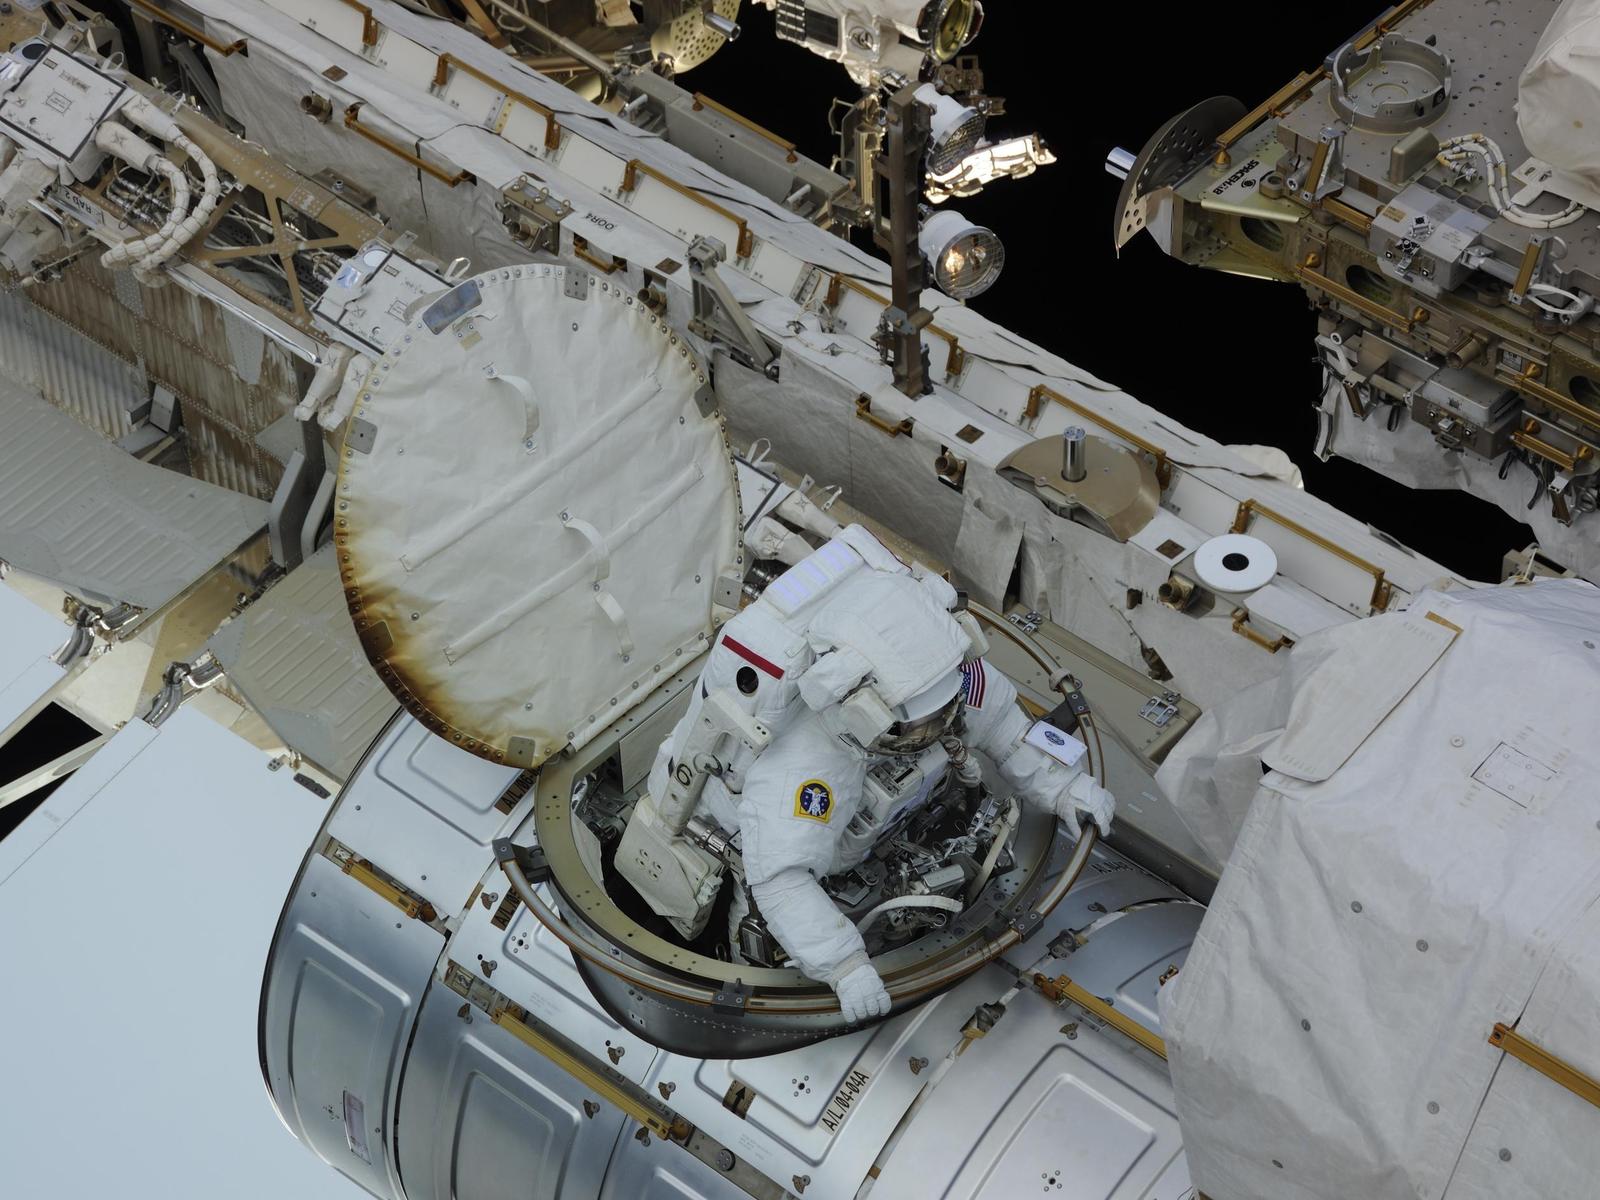 Download desktop wallpaper Astronaut in space station hatch